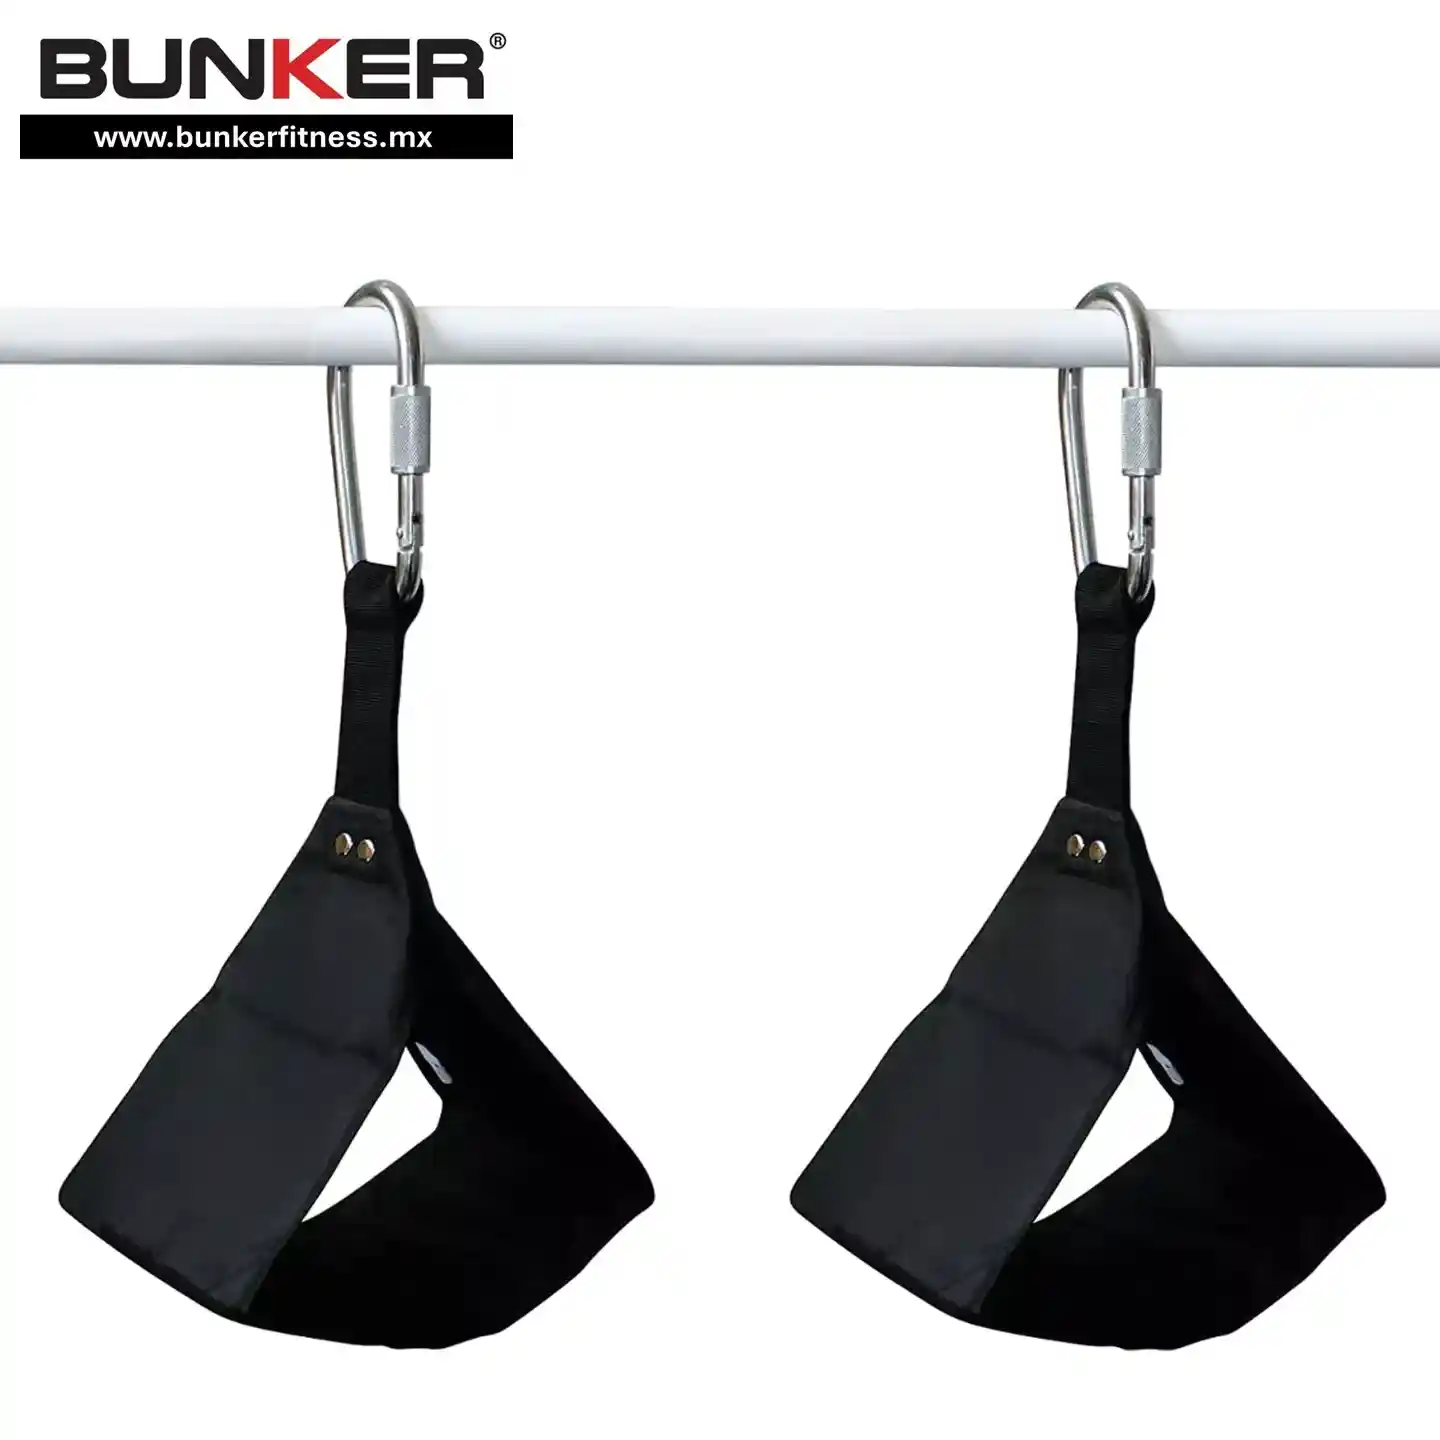 ab sling straps deportistas bunker fitness para ejercicio y gimnasio en casa bunker gym bunker fitness